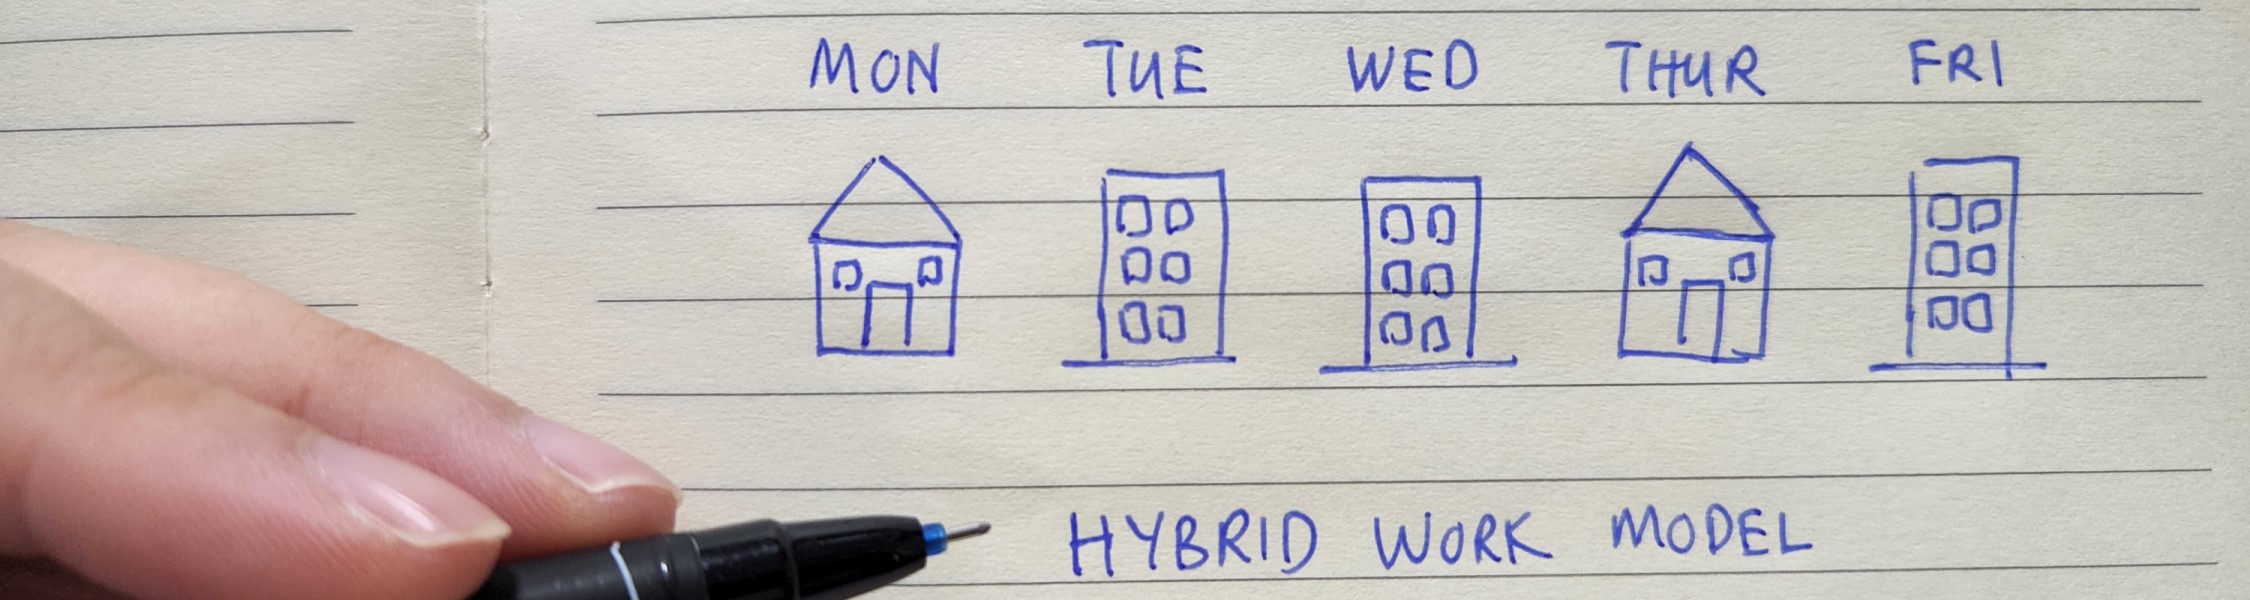 Hybrid work model notebook concept_banner